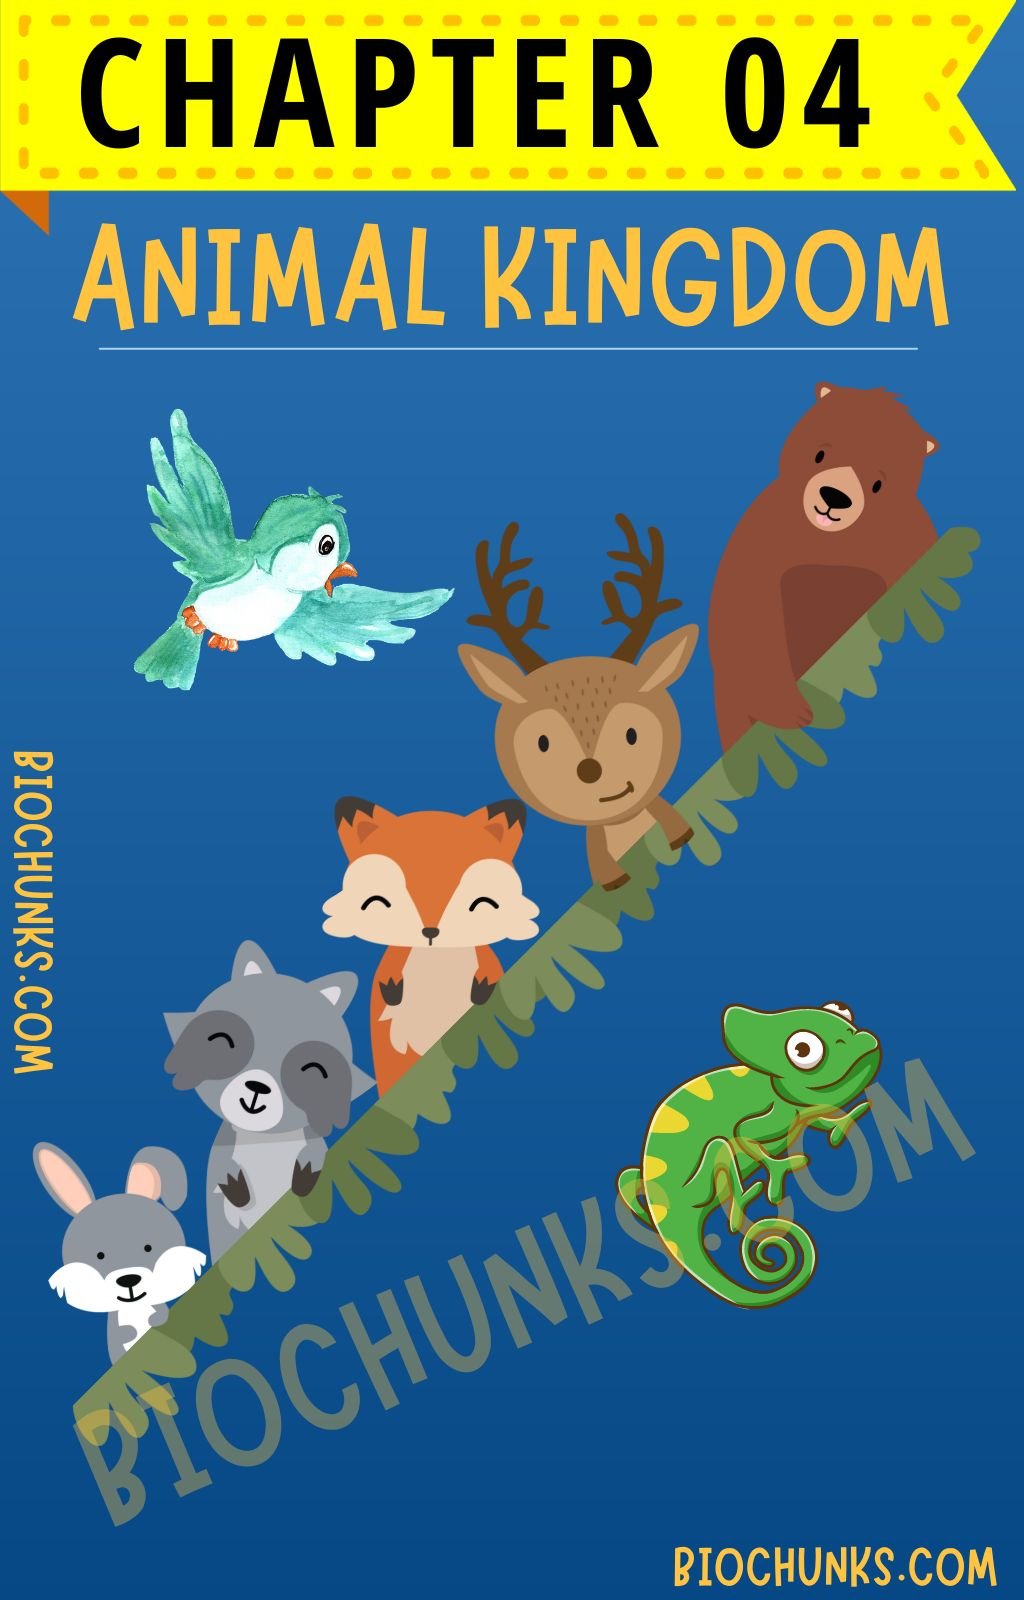 Animal Kingdom Chapter 04 Class 11th biochunks.com